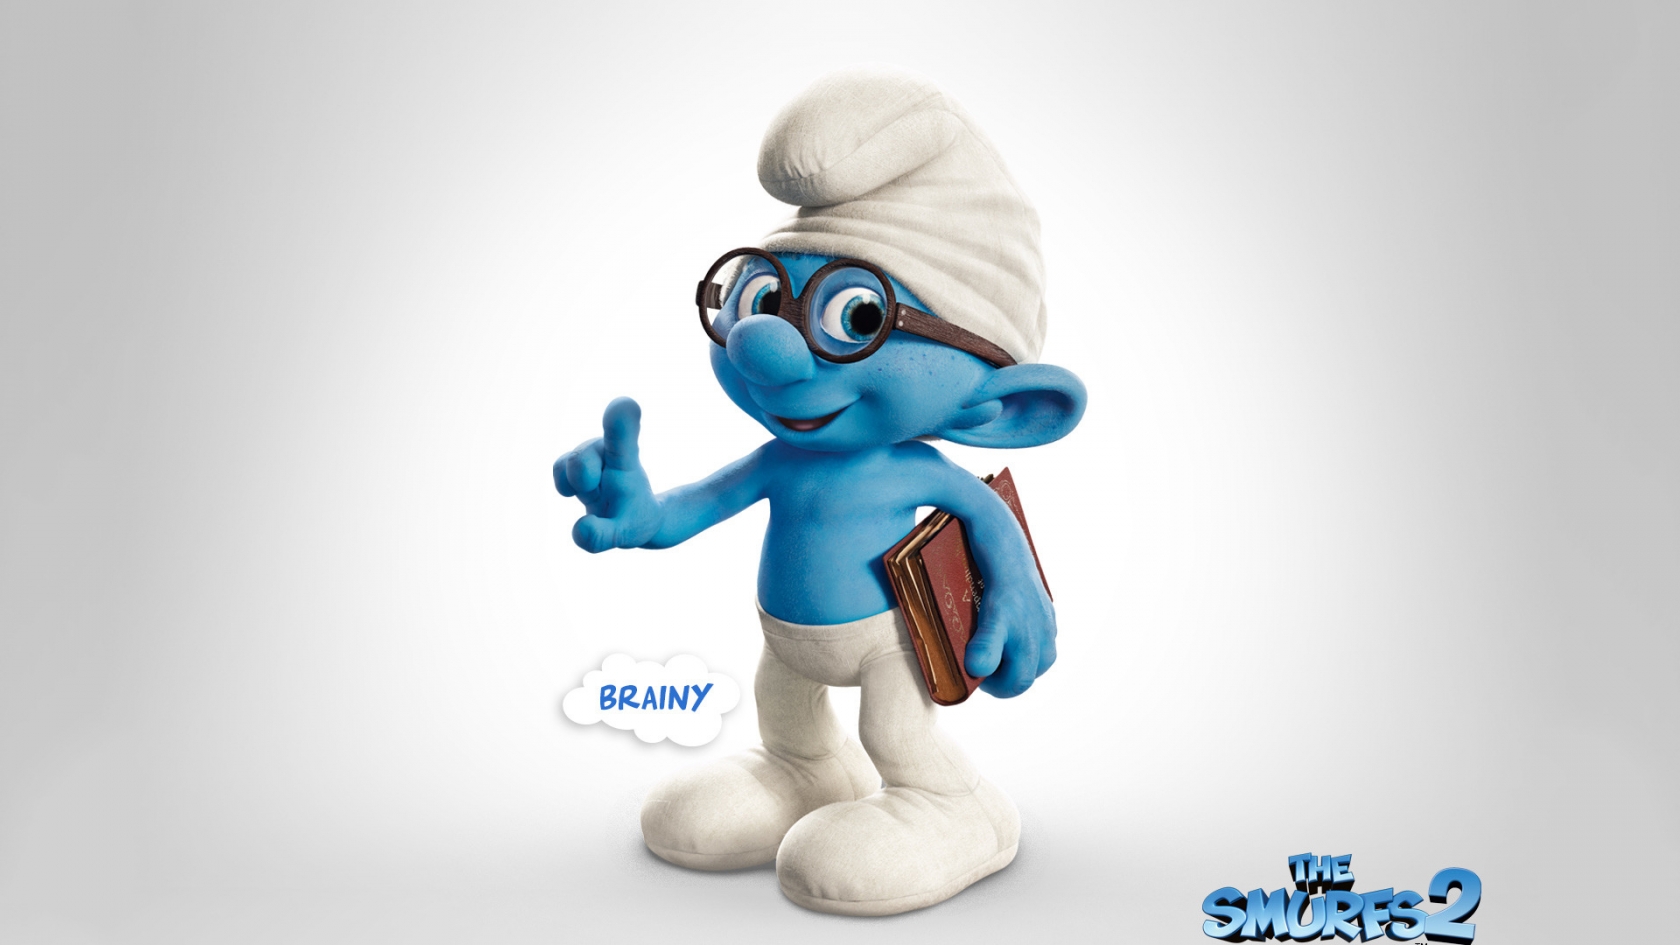 Brainy The Smurfs 2 for 1680 x 945 HDTV resolution